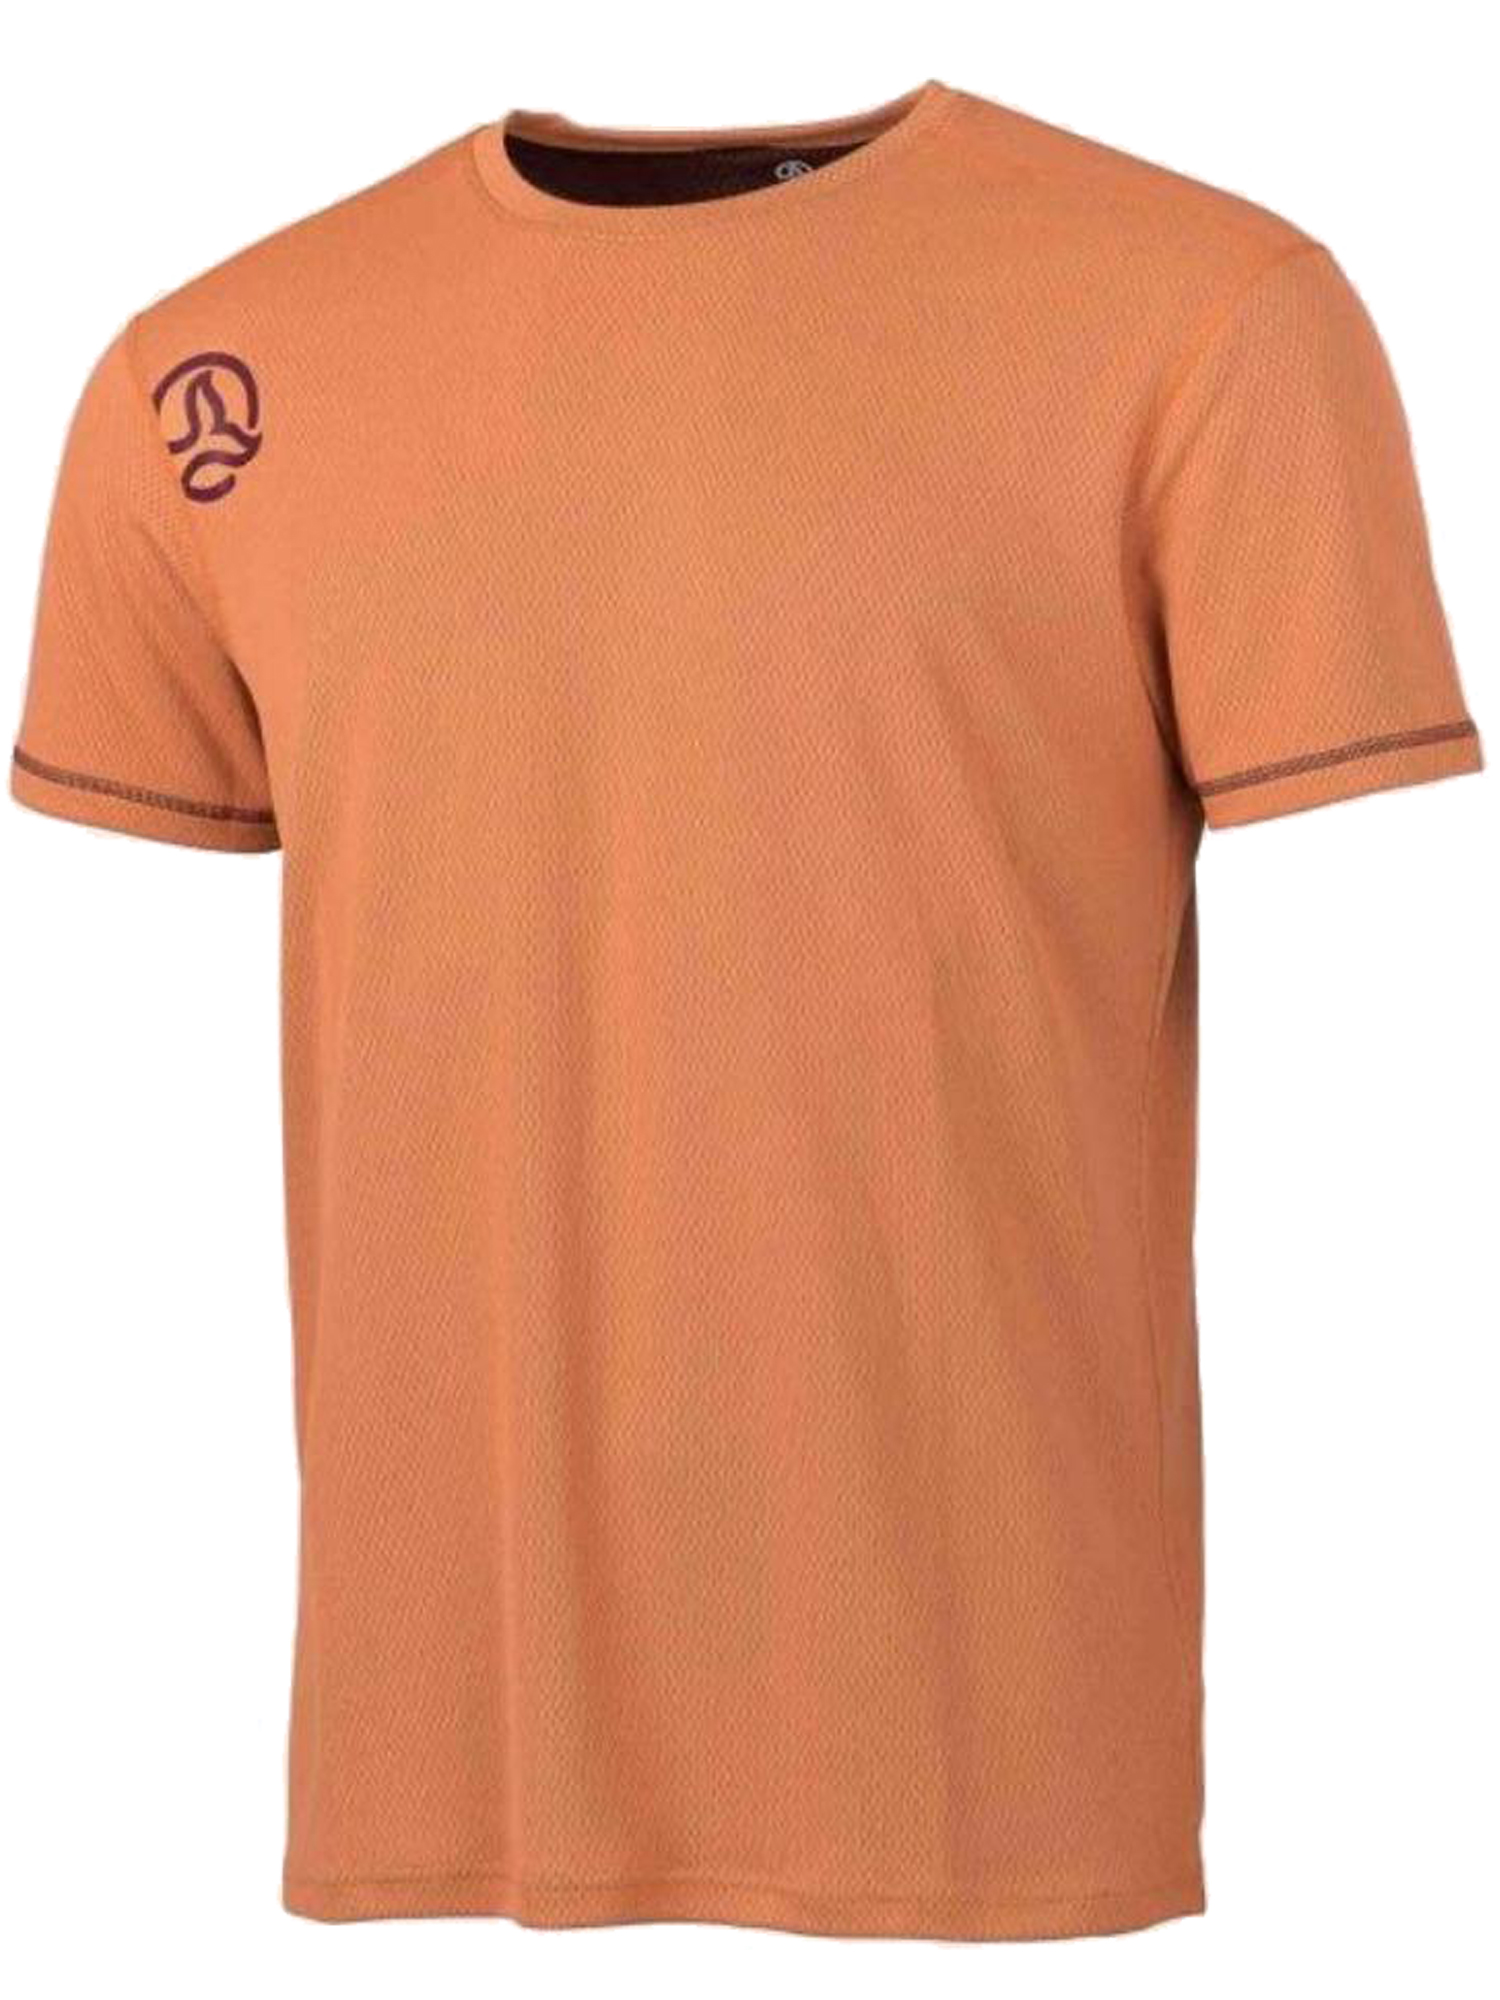 Футболка мужская Ternua Slum Tee M оранжевая XL